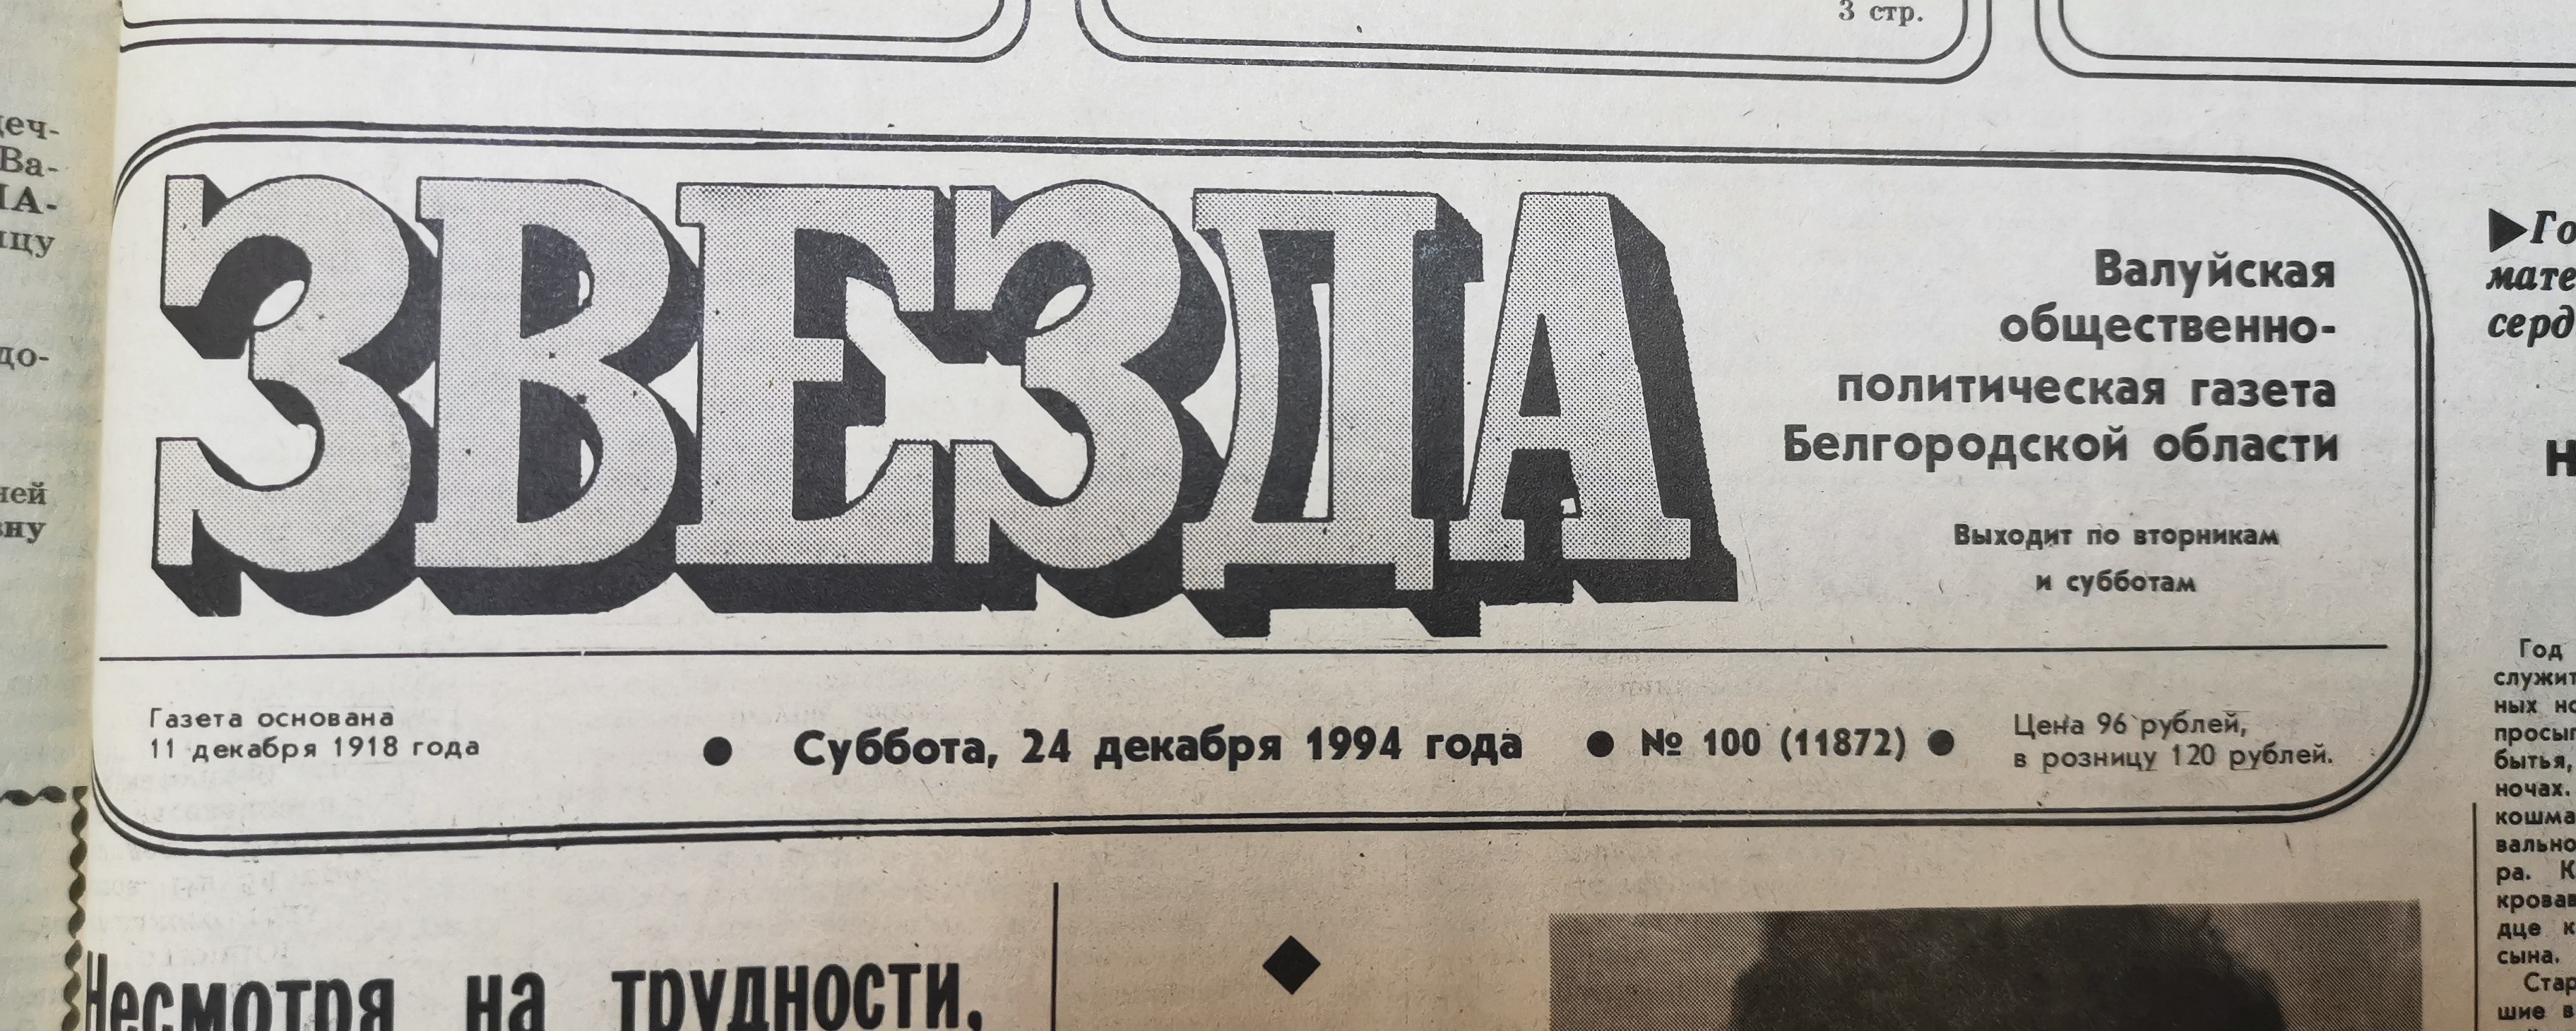 Первая страница газеты «Звезда», 1994 год